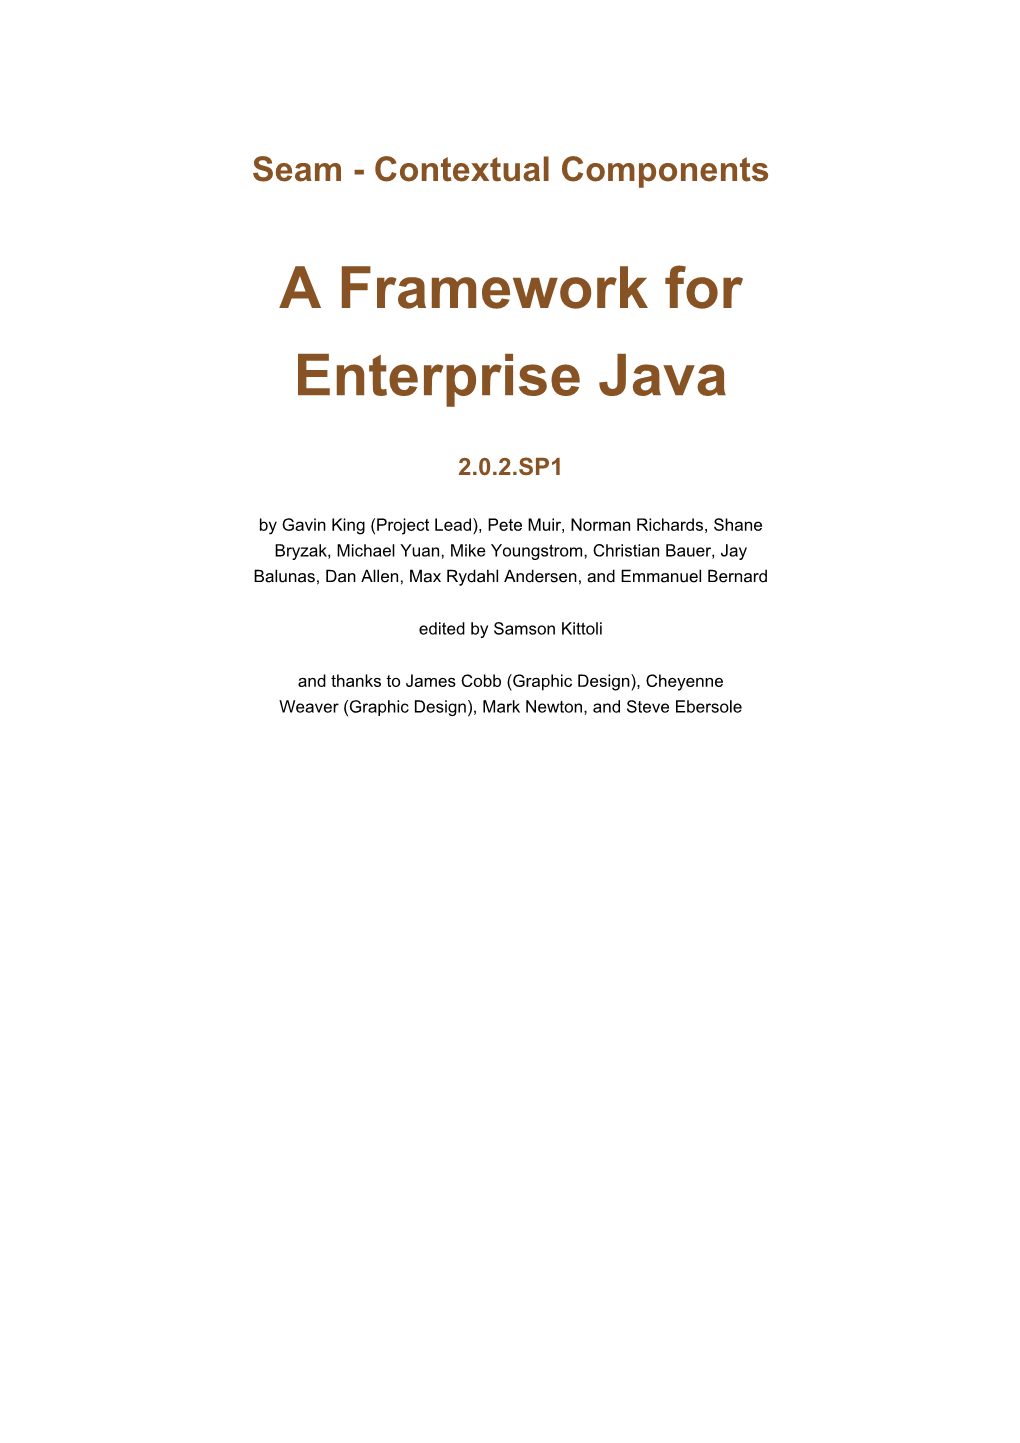 A Framework for Enterprise Java